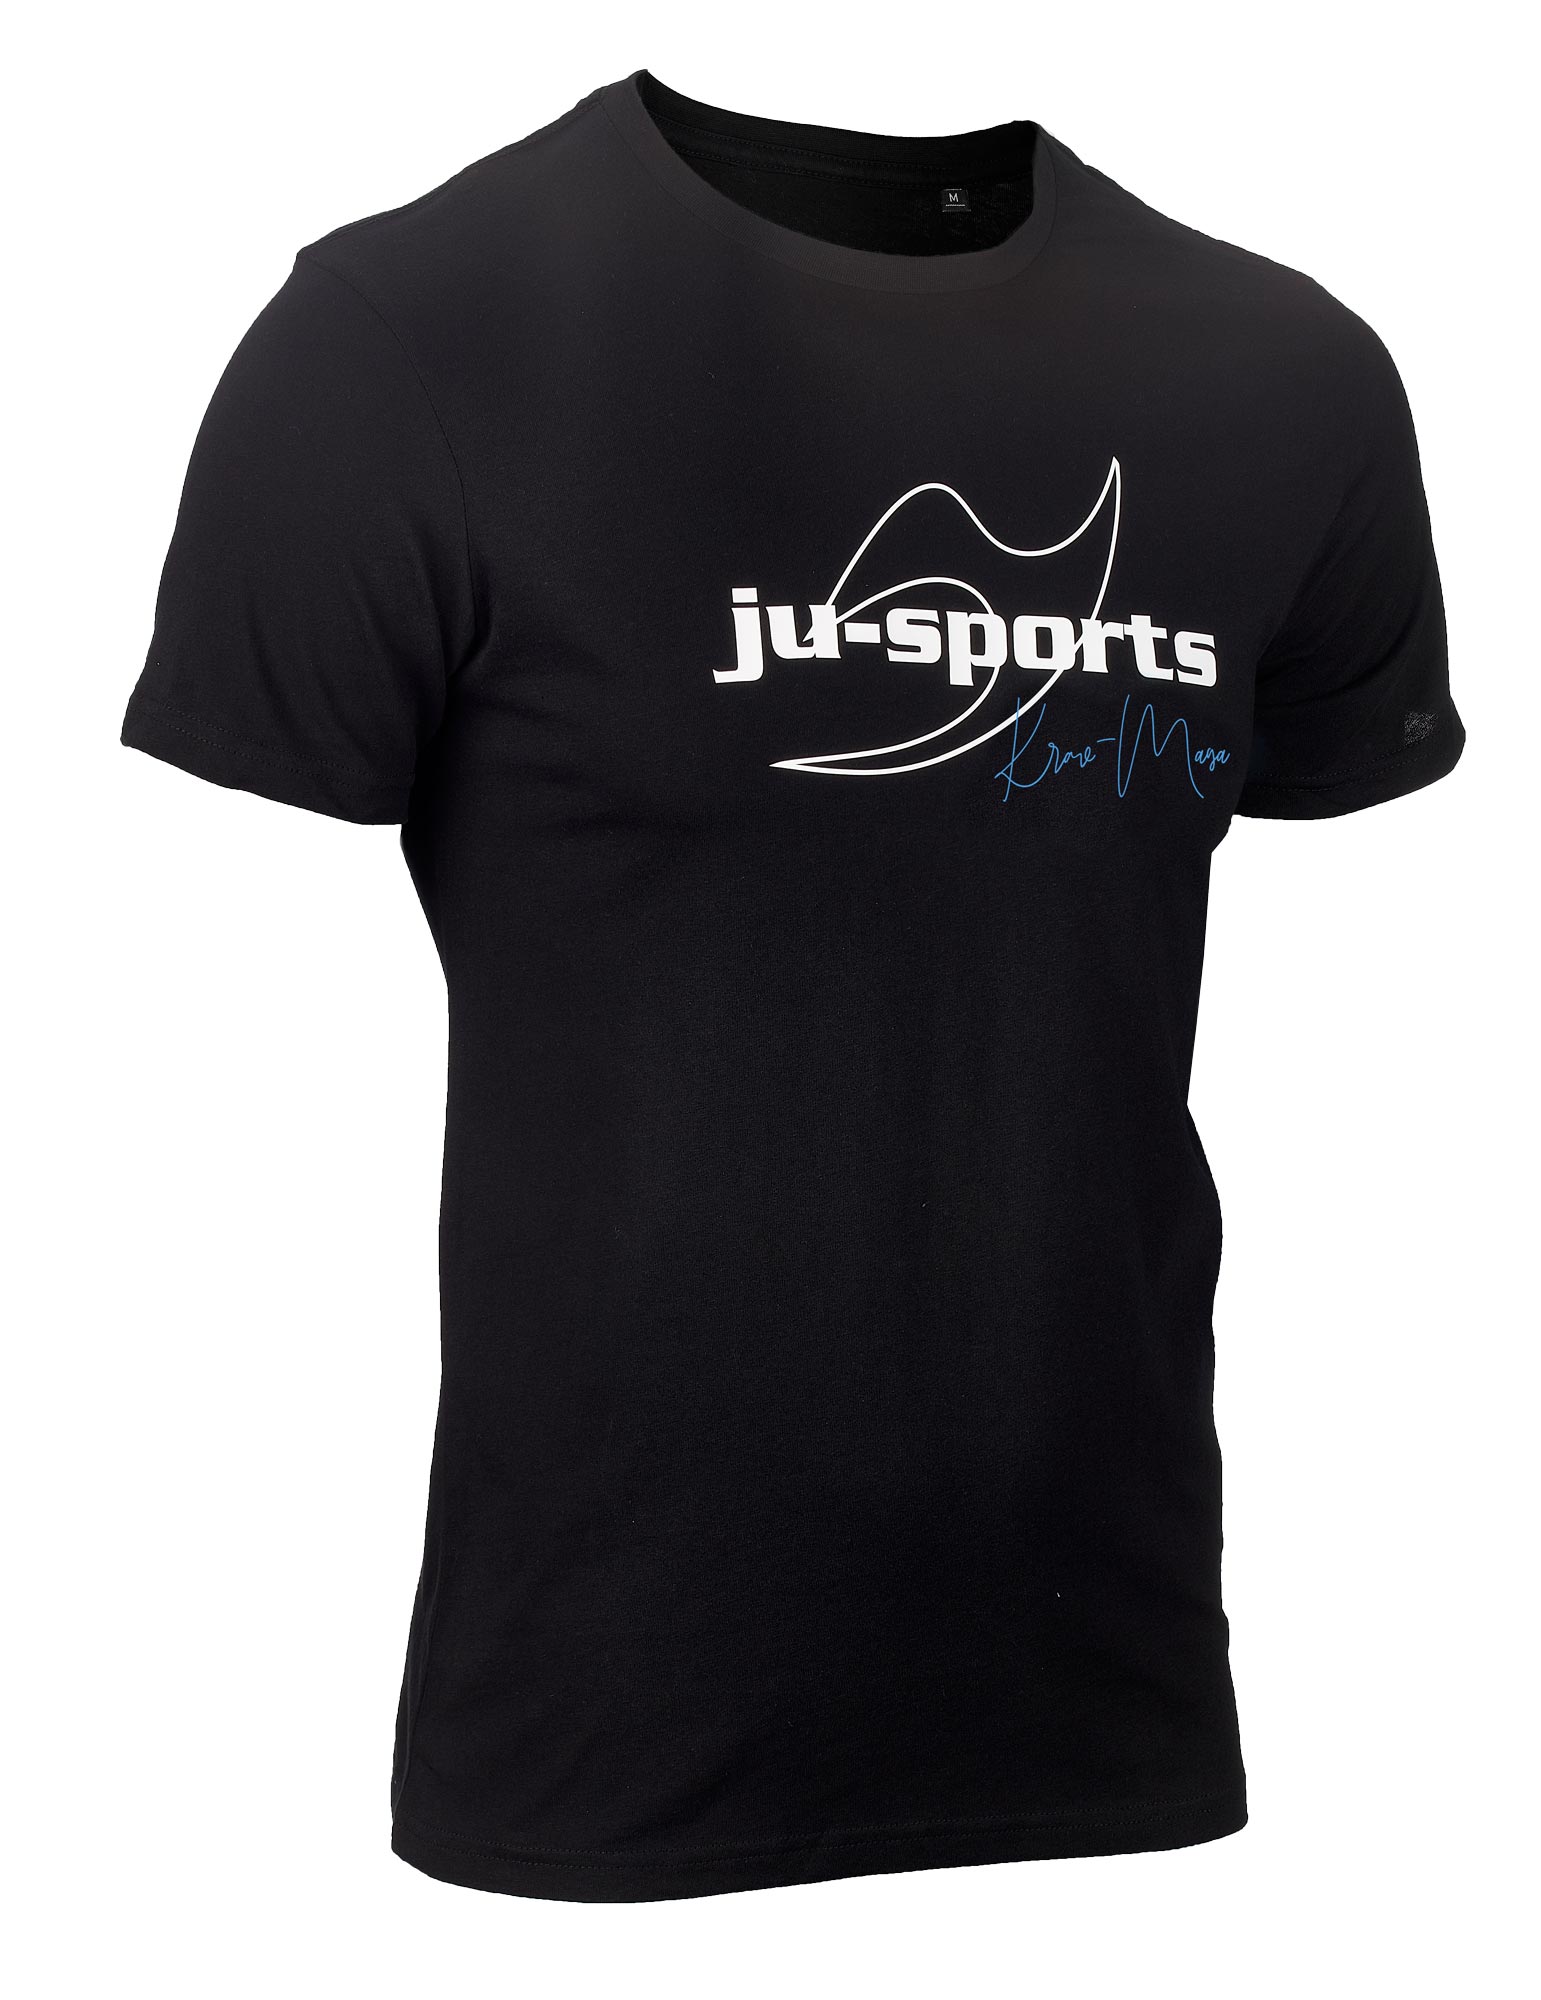 Ju-Sports Signature Line Shirt Krav Maga